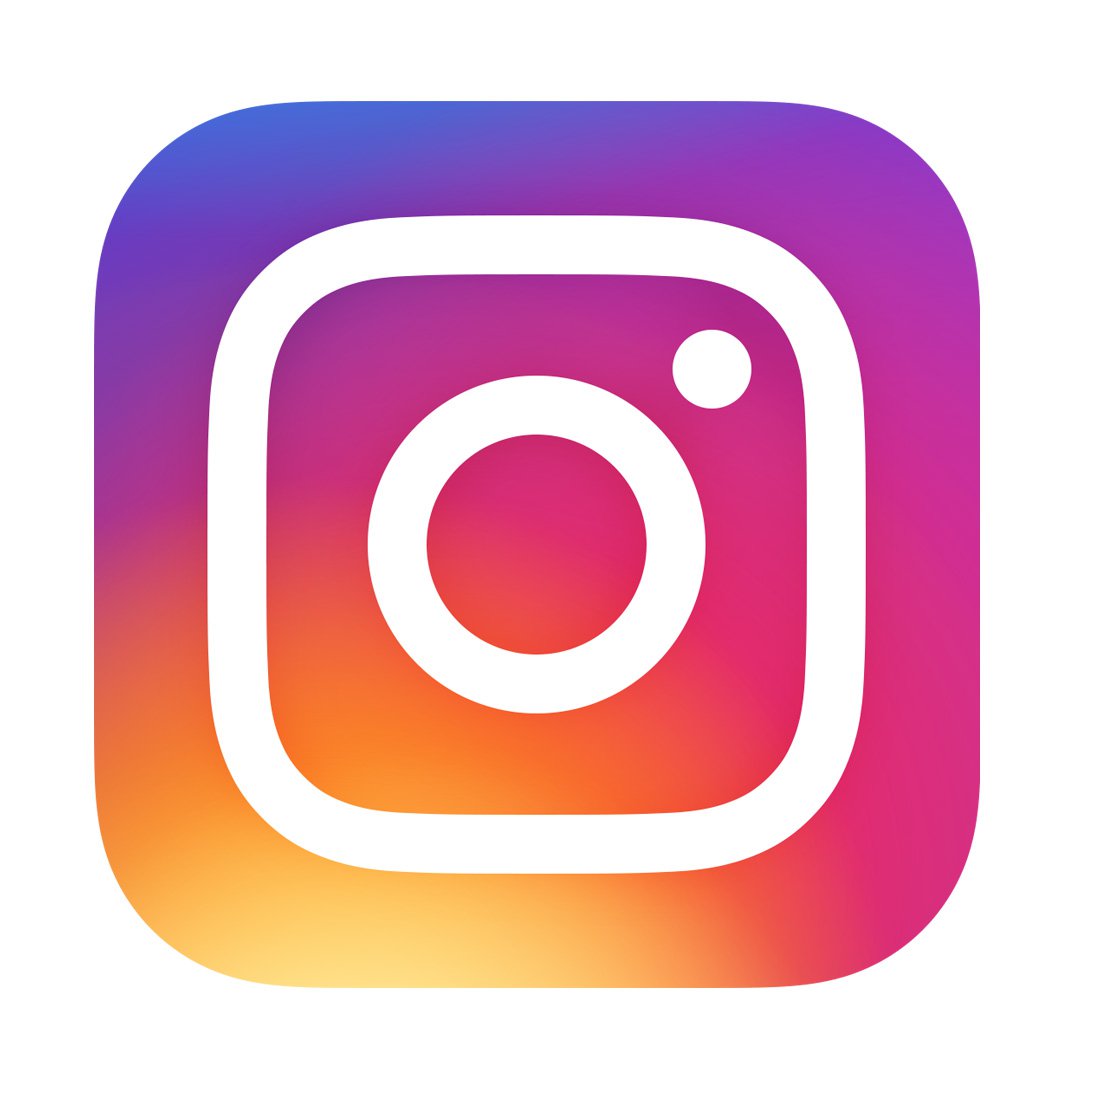 Instagram Logo, Instagram Symbol Meaning, History and Evolution